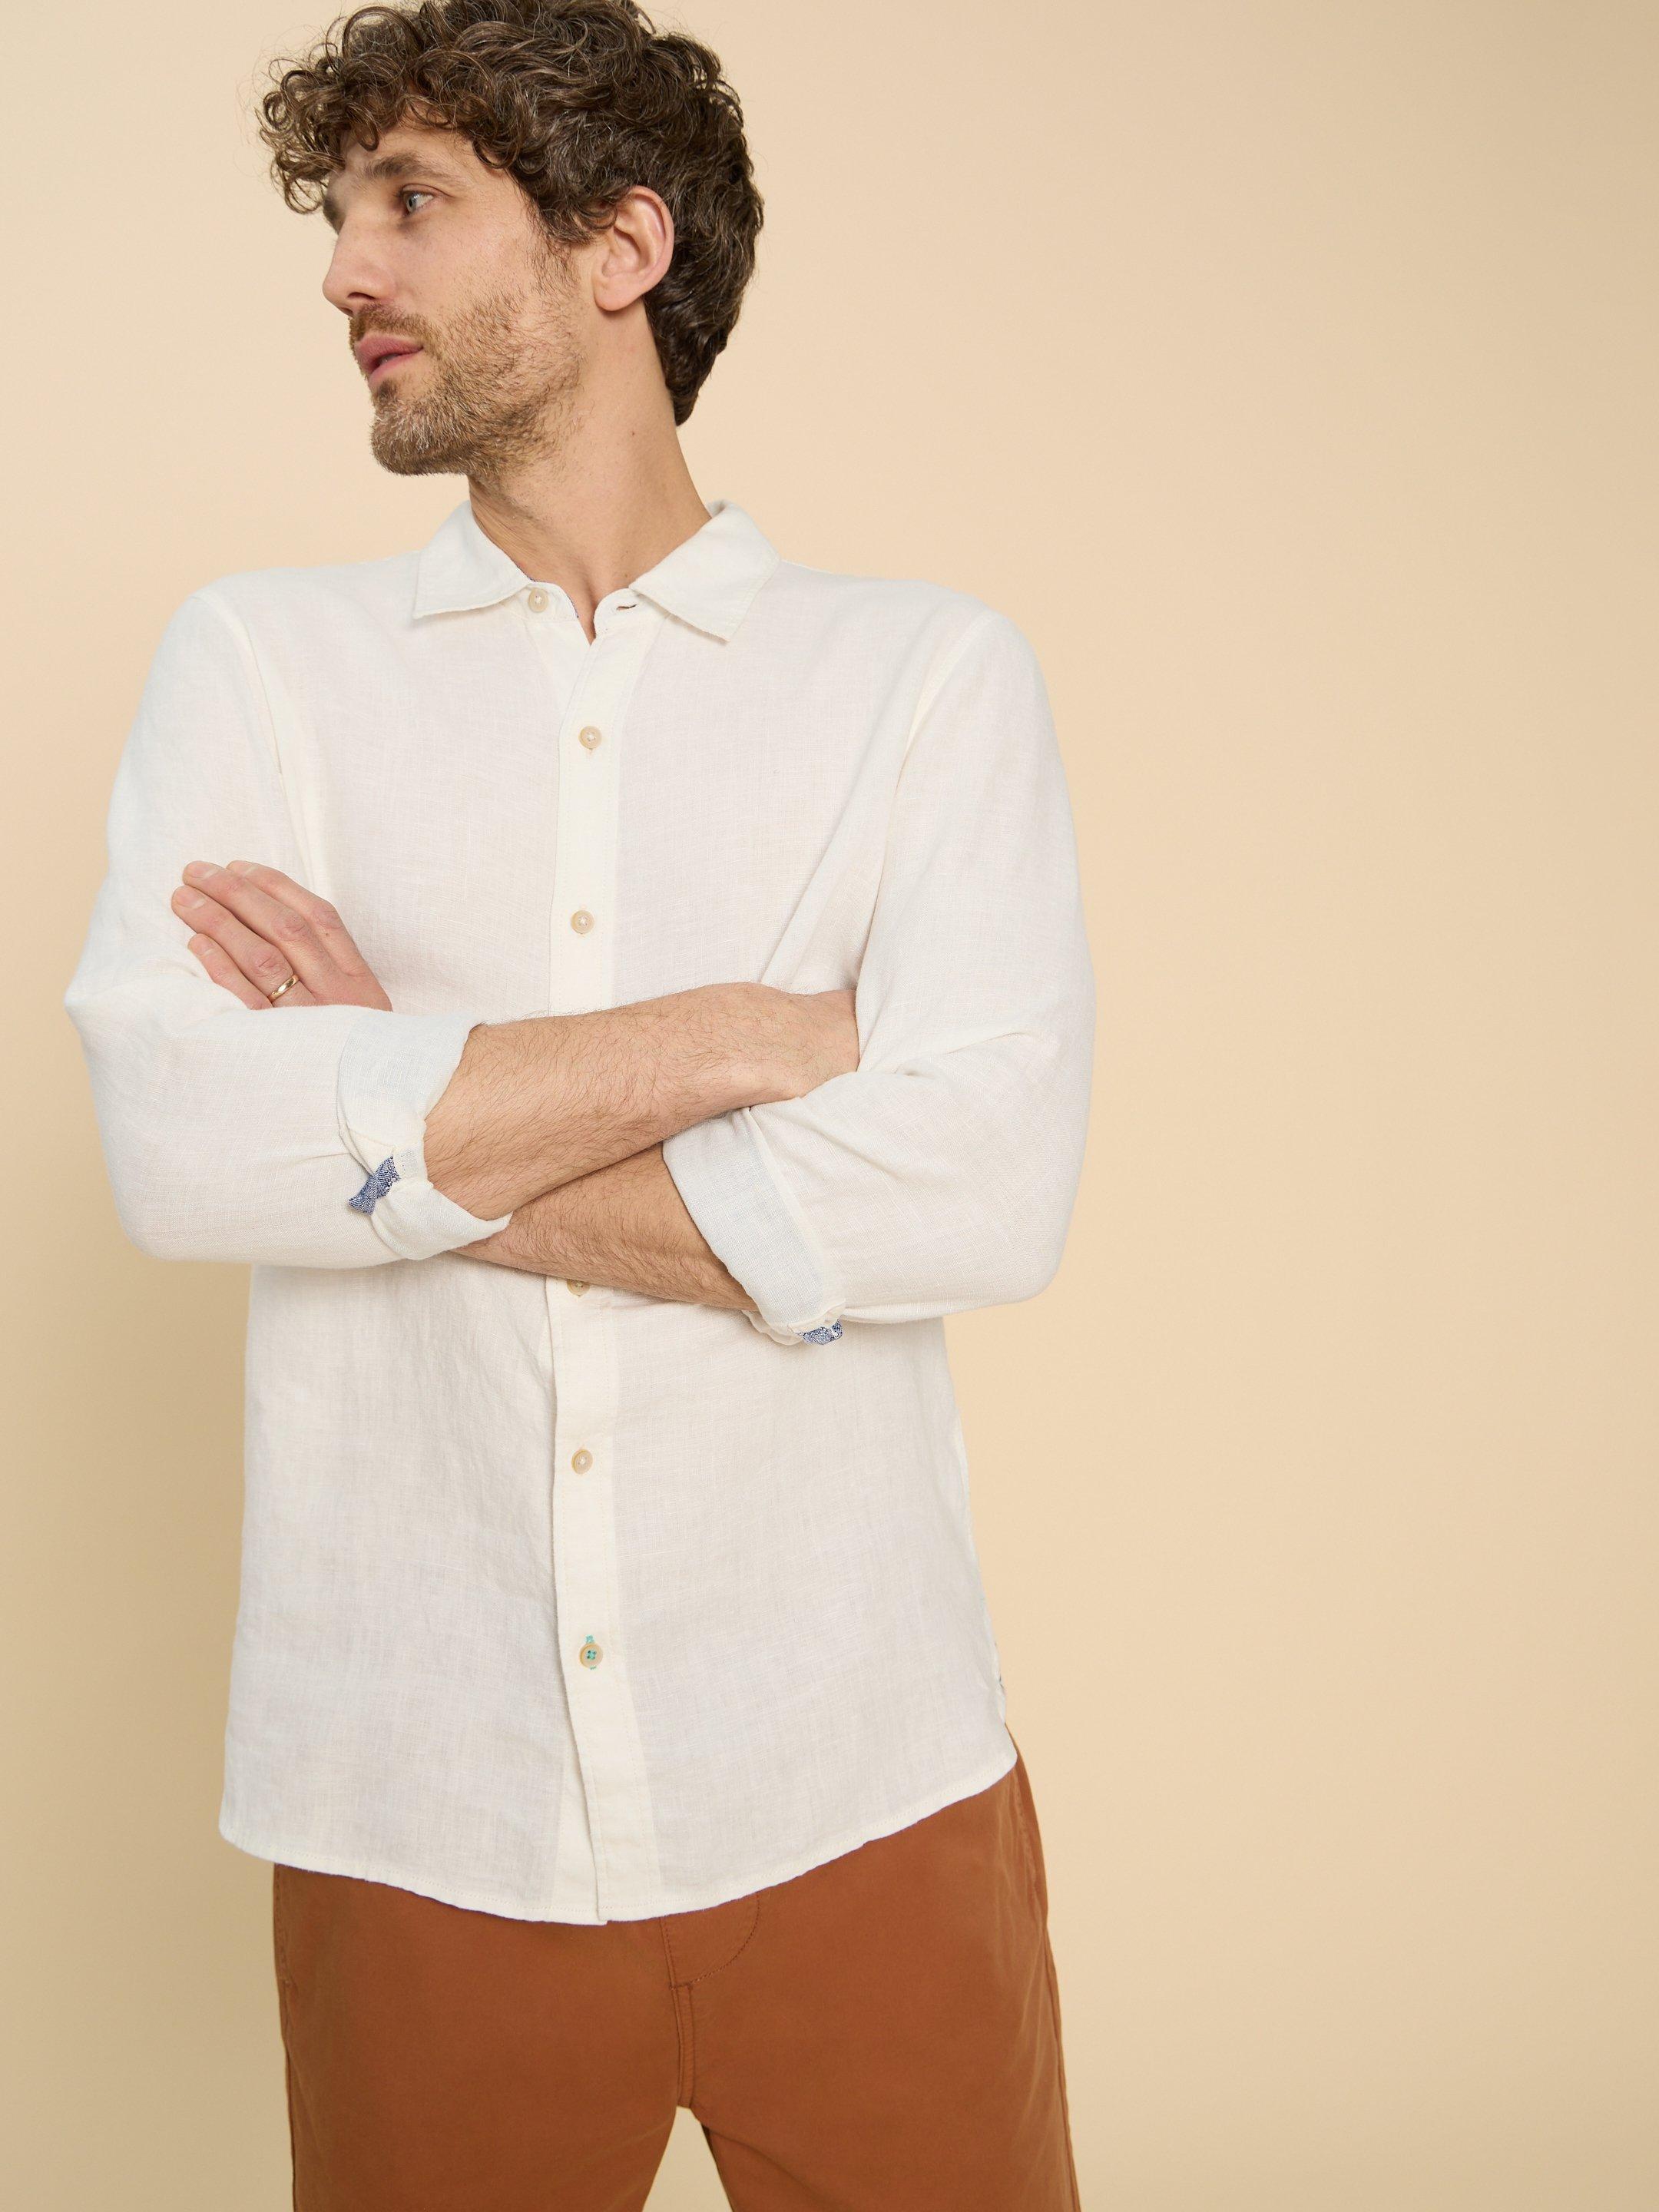 Pembroke LS Linen Shirt in BRIL WHITE - LIFESTYLE